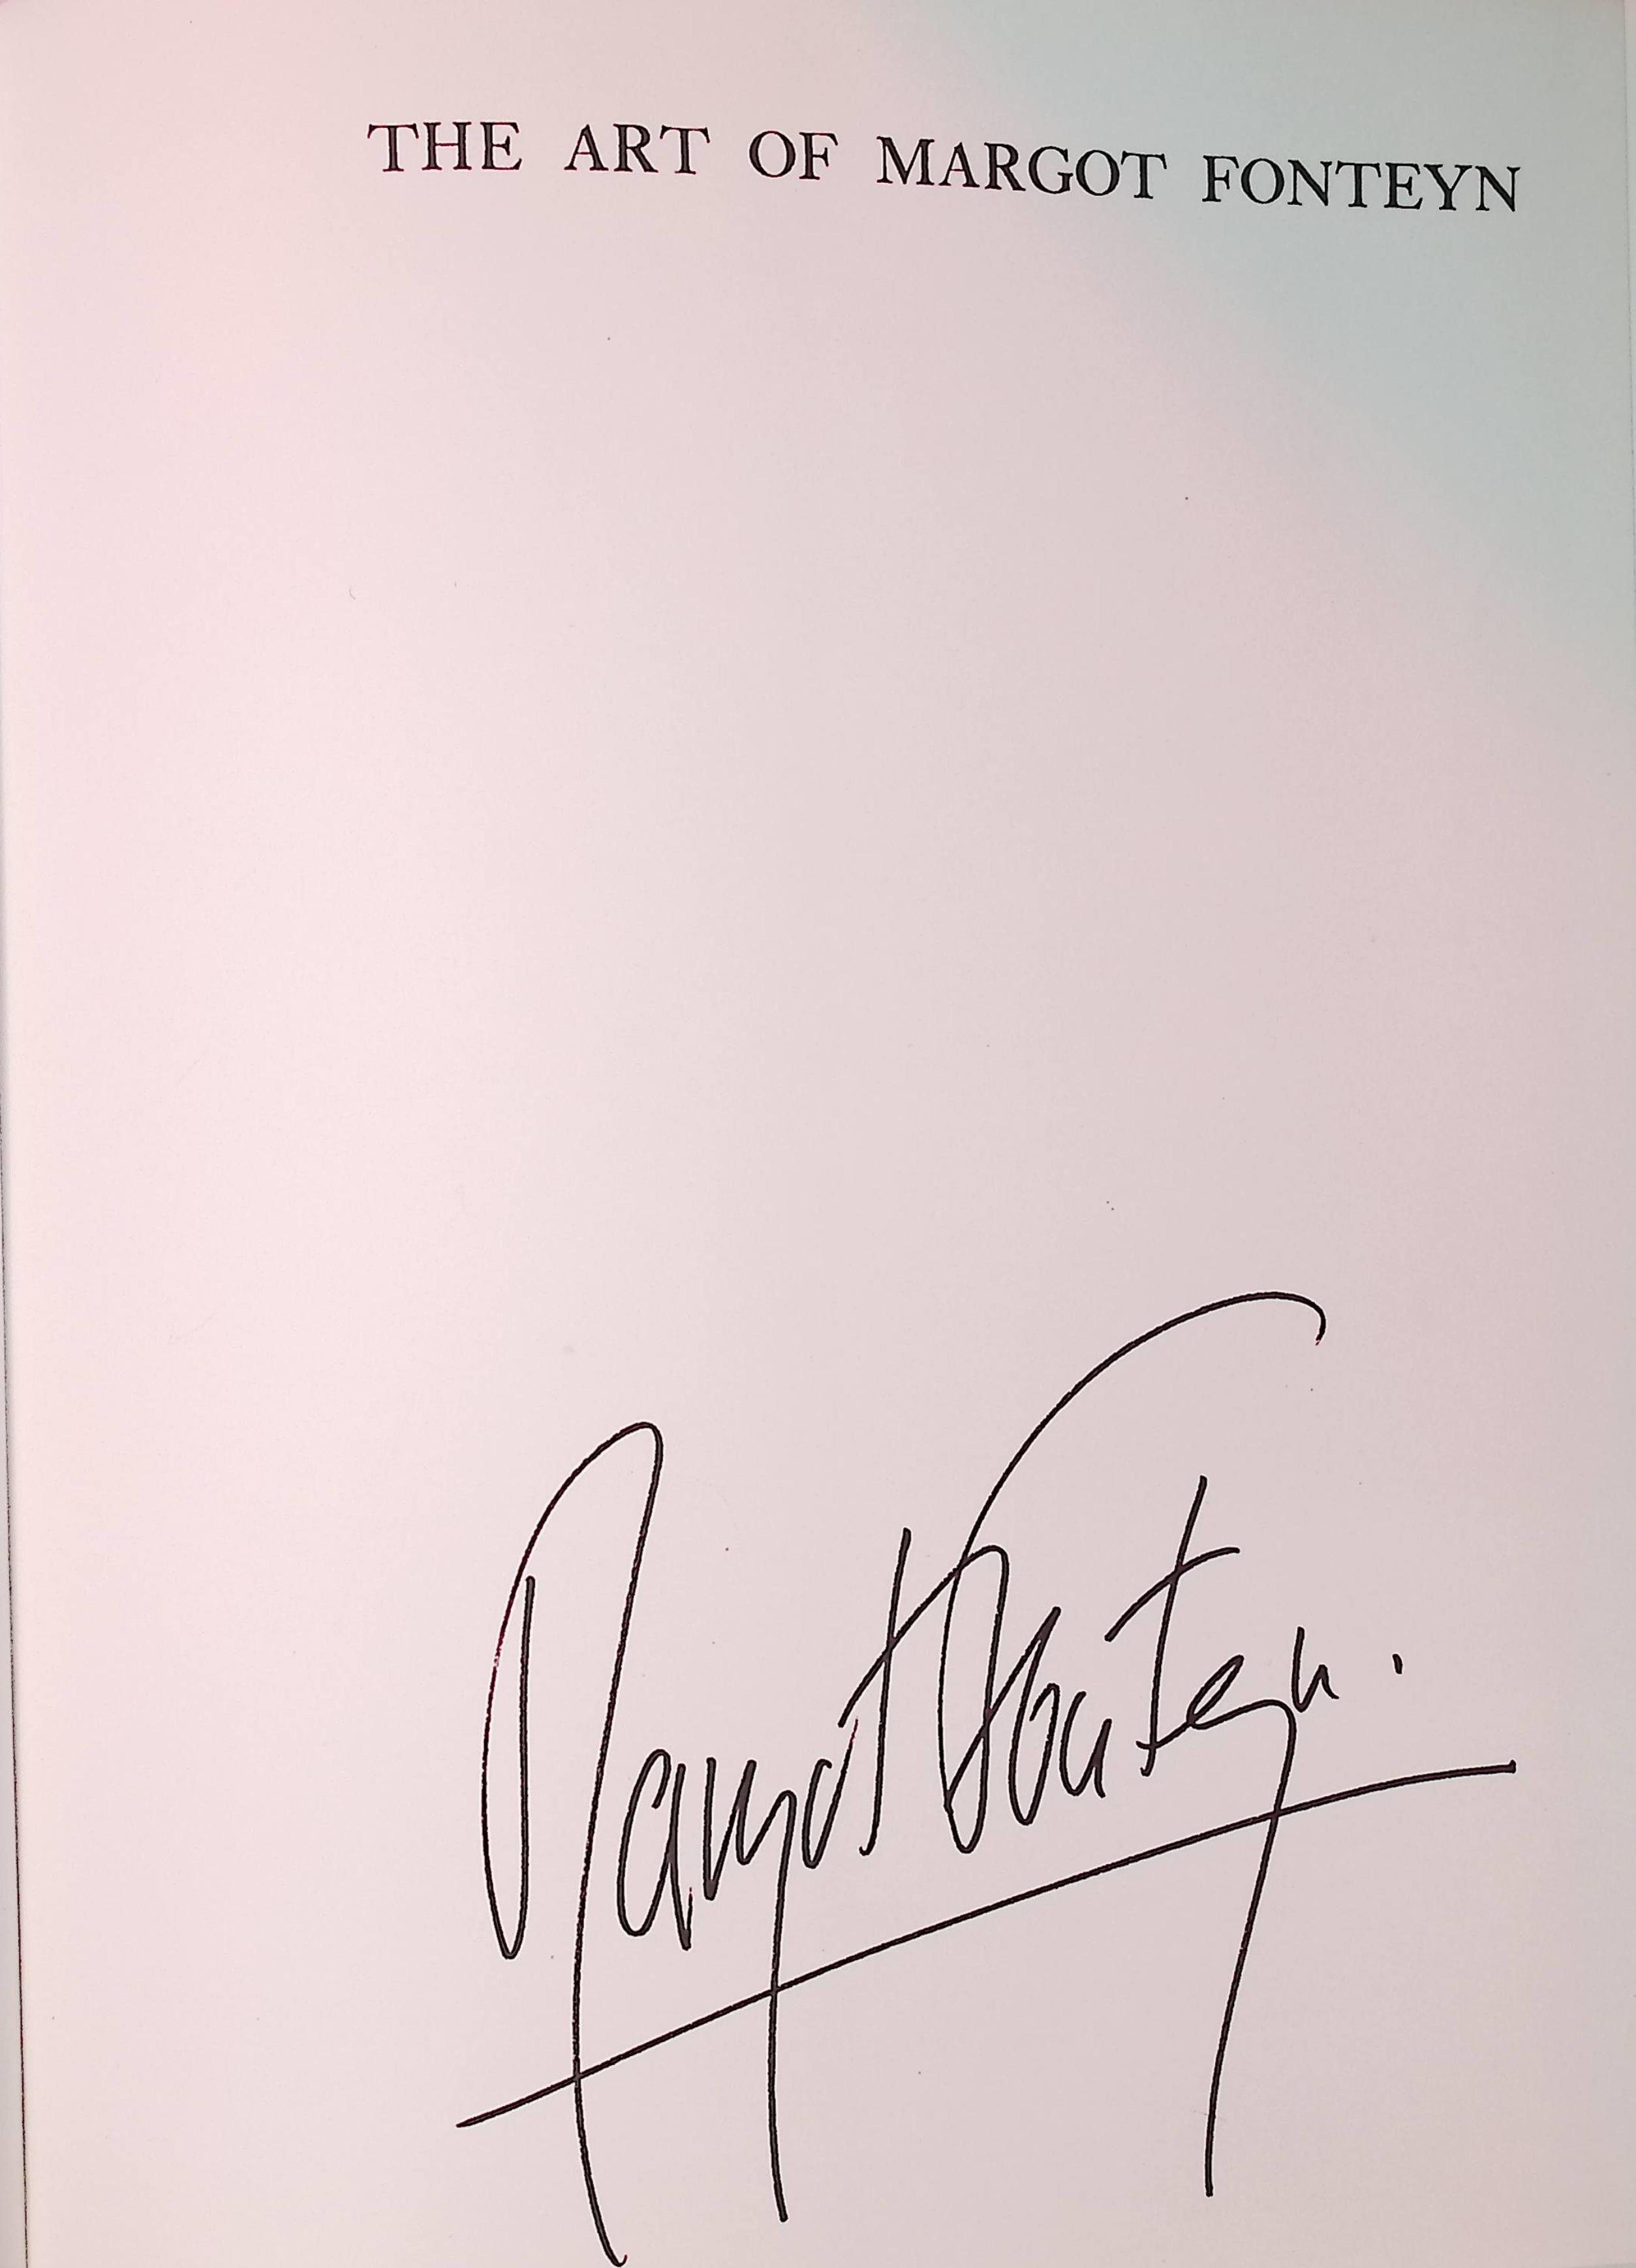 The Art of Margot Fonteyn. Signed Copy.